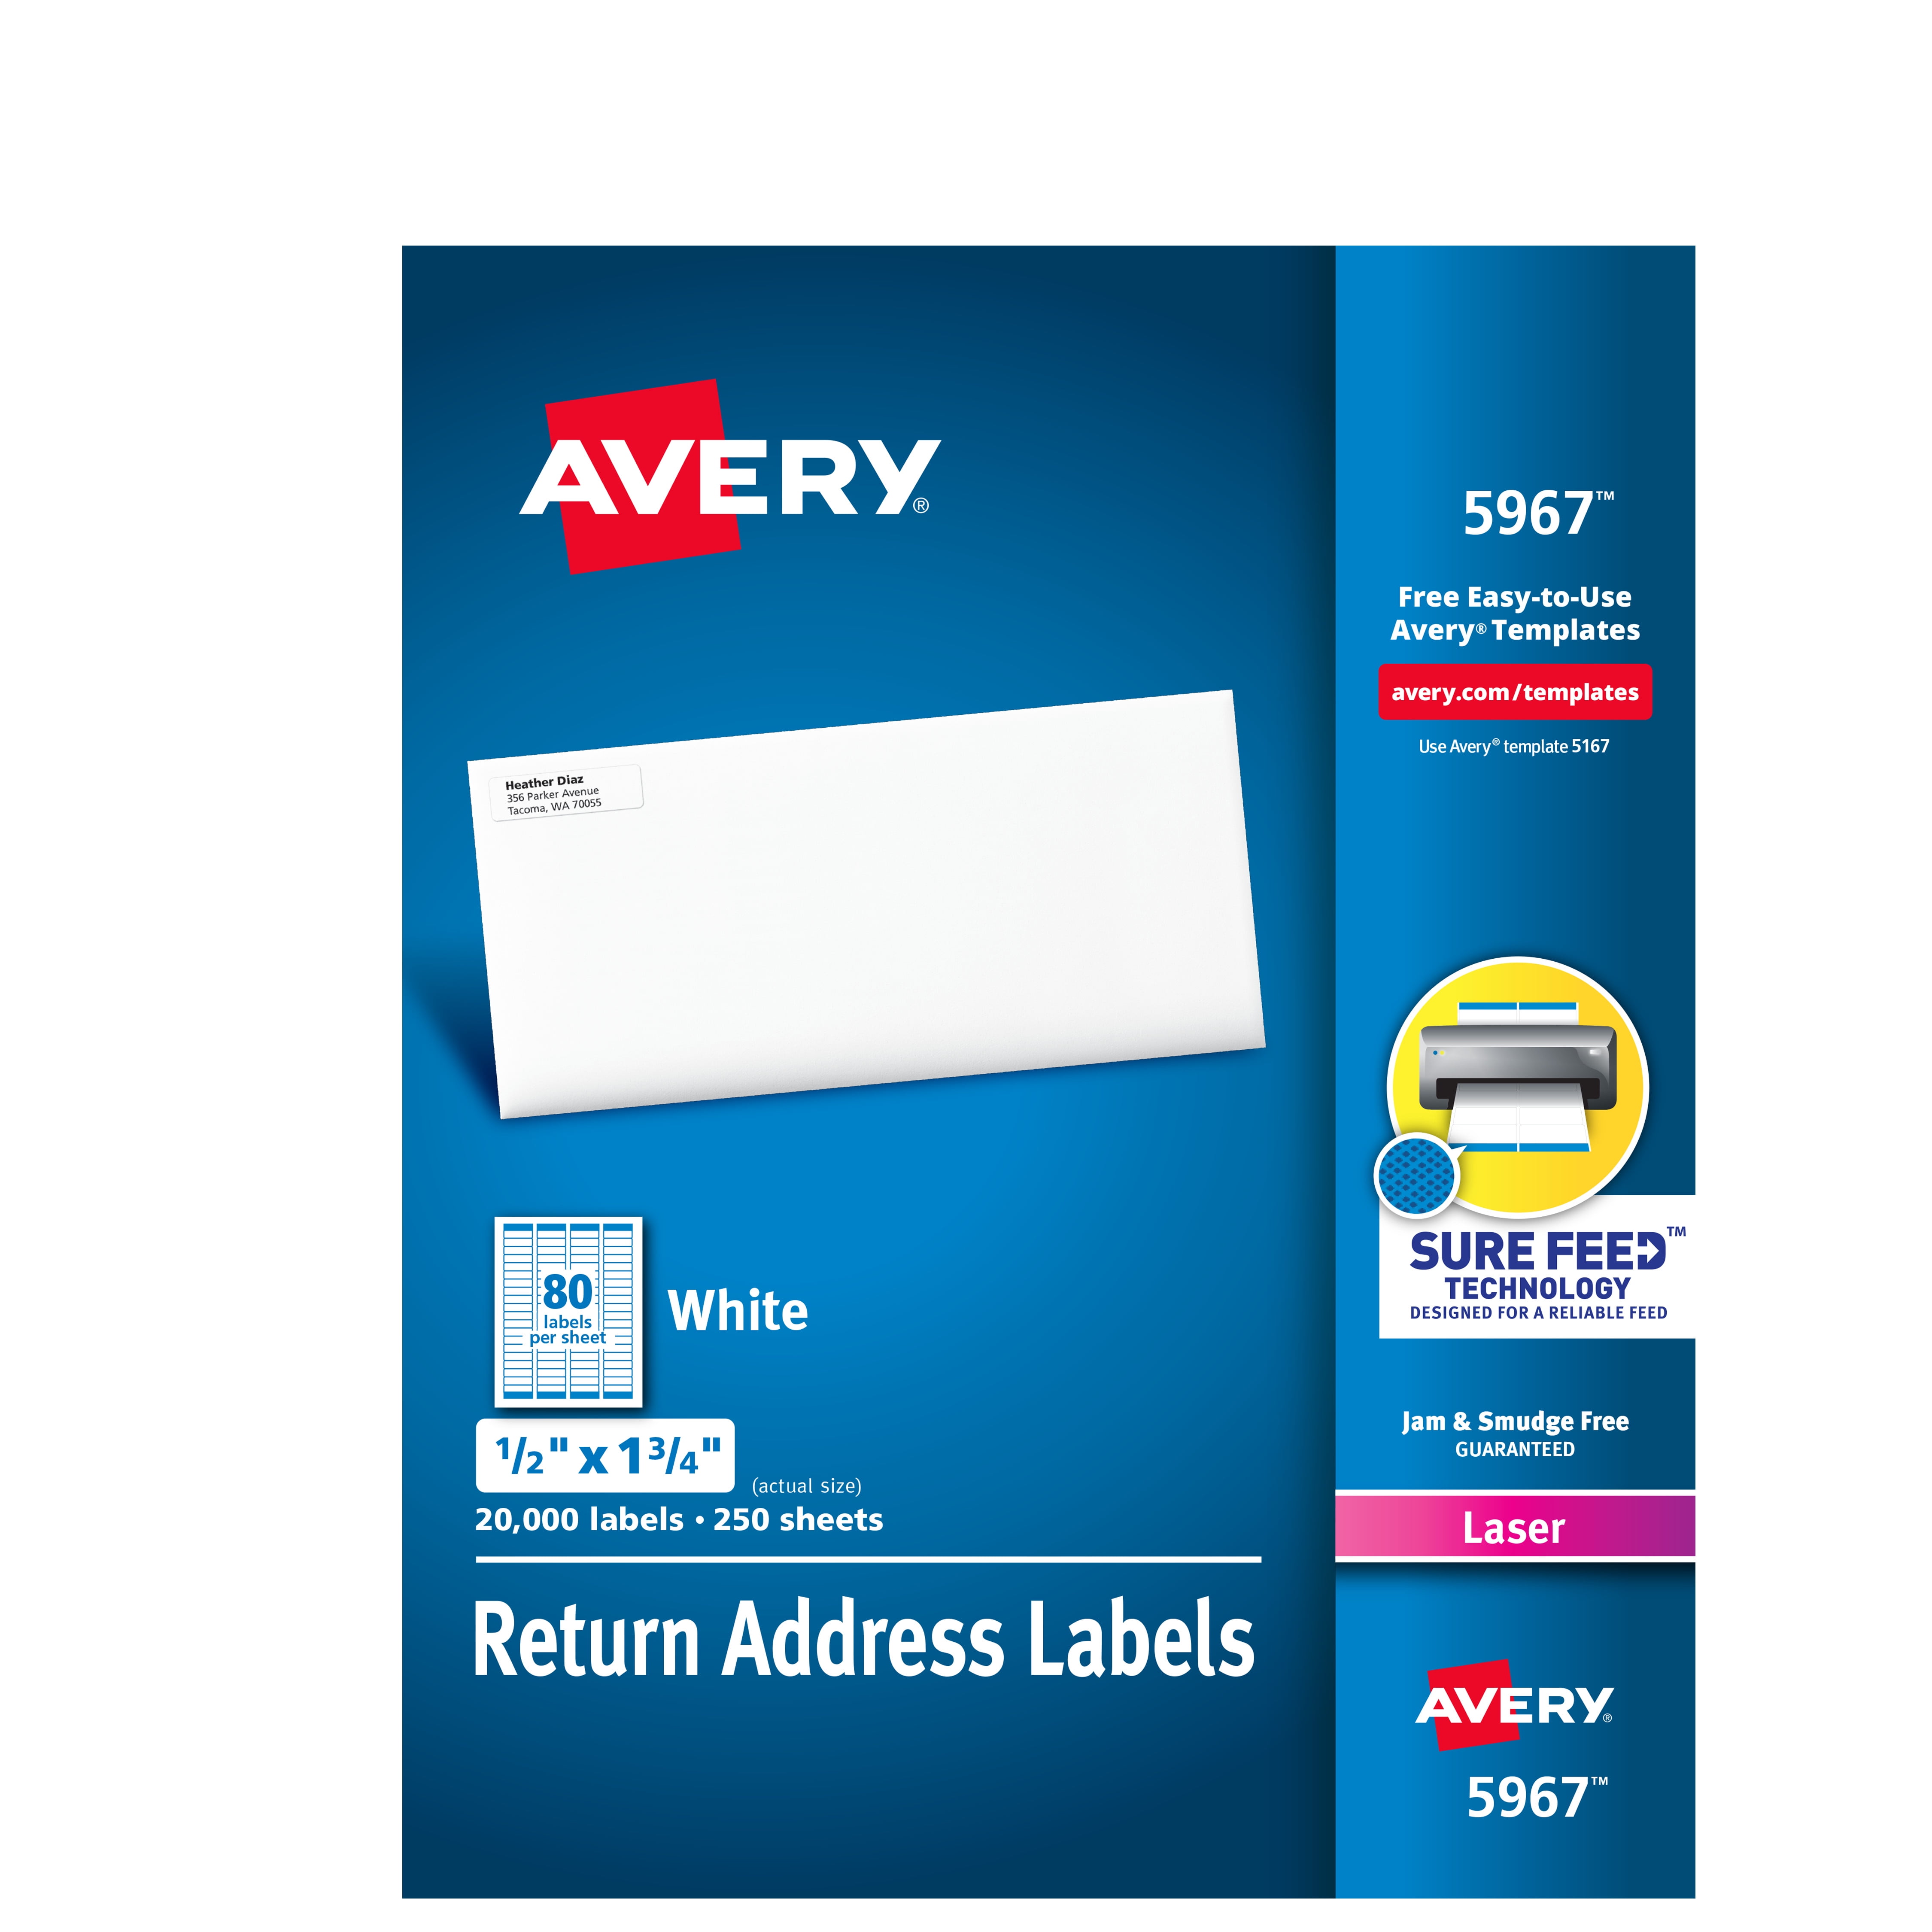 avery mac label expert free download